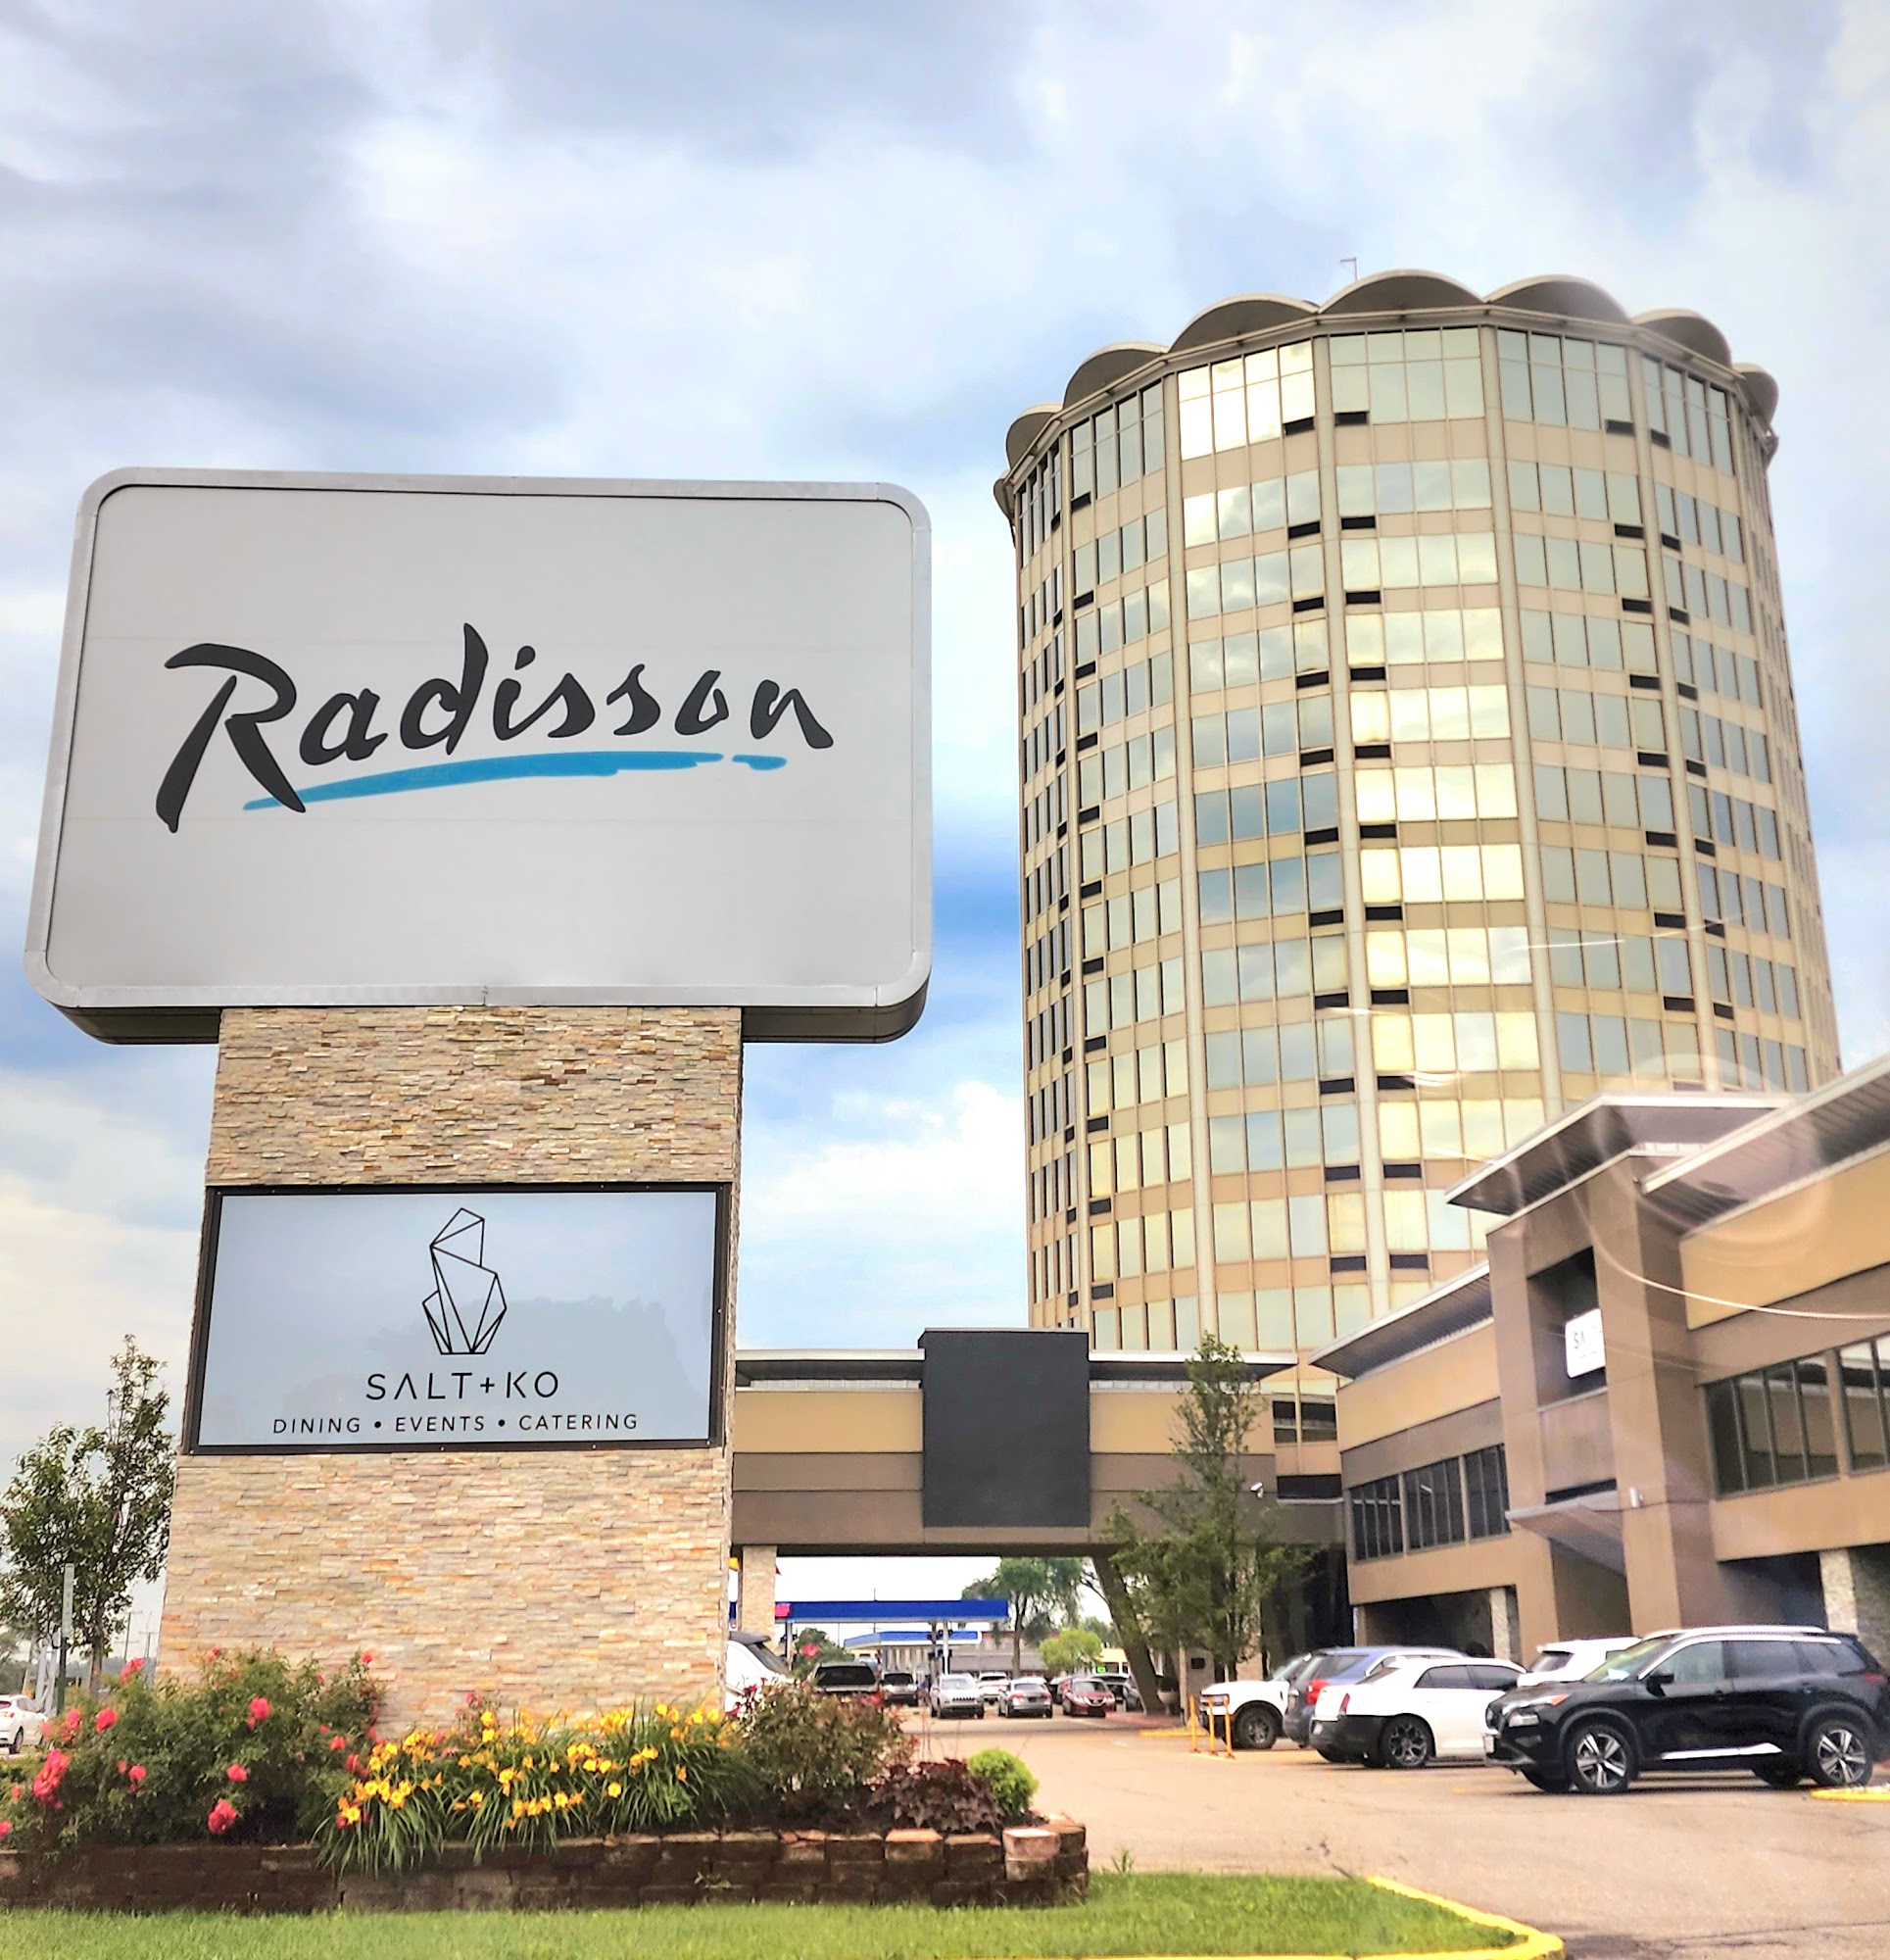 Radisson Hotel Southfield-Detroit